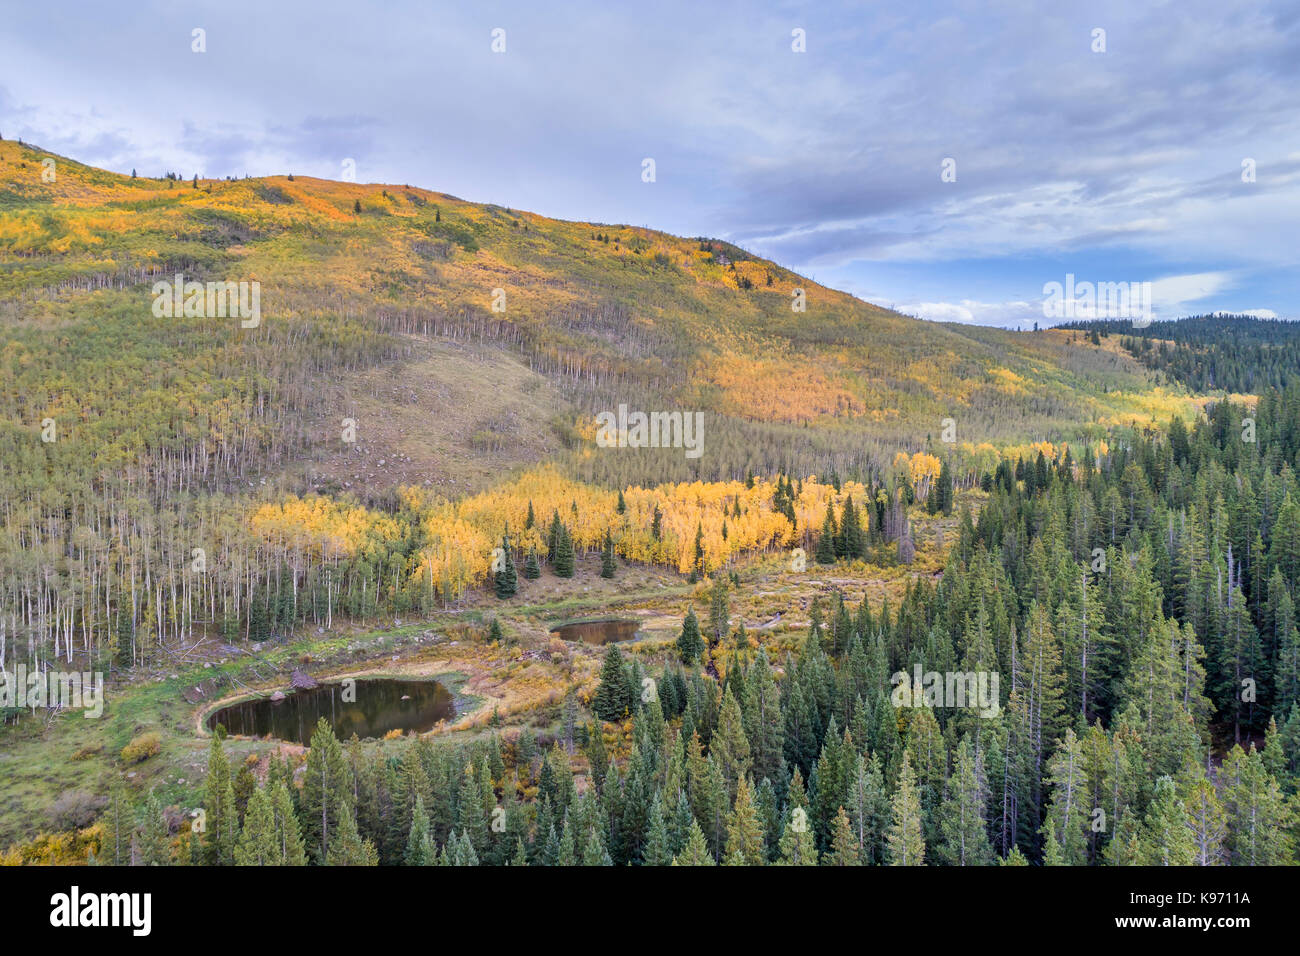 aspen trees in fall colors at Kenosha Pass in Colorado, aerial view Stock Photo